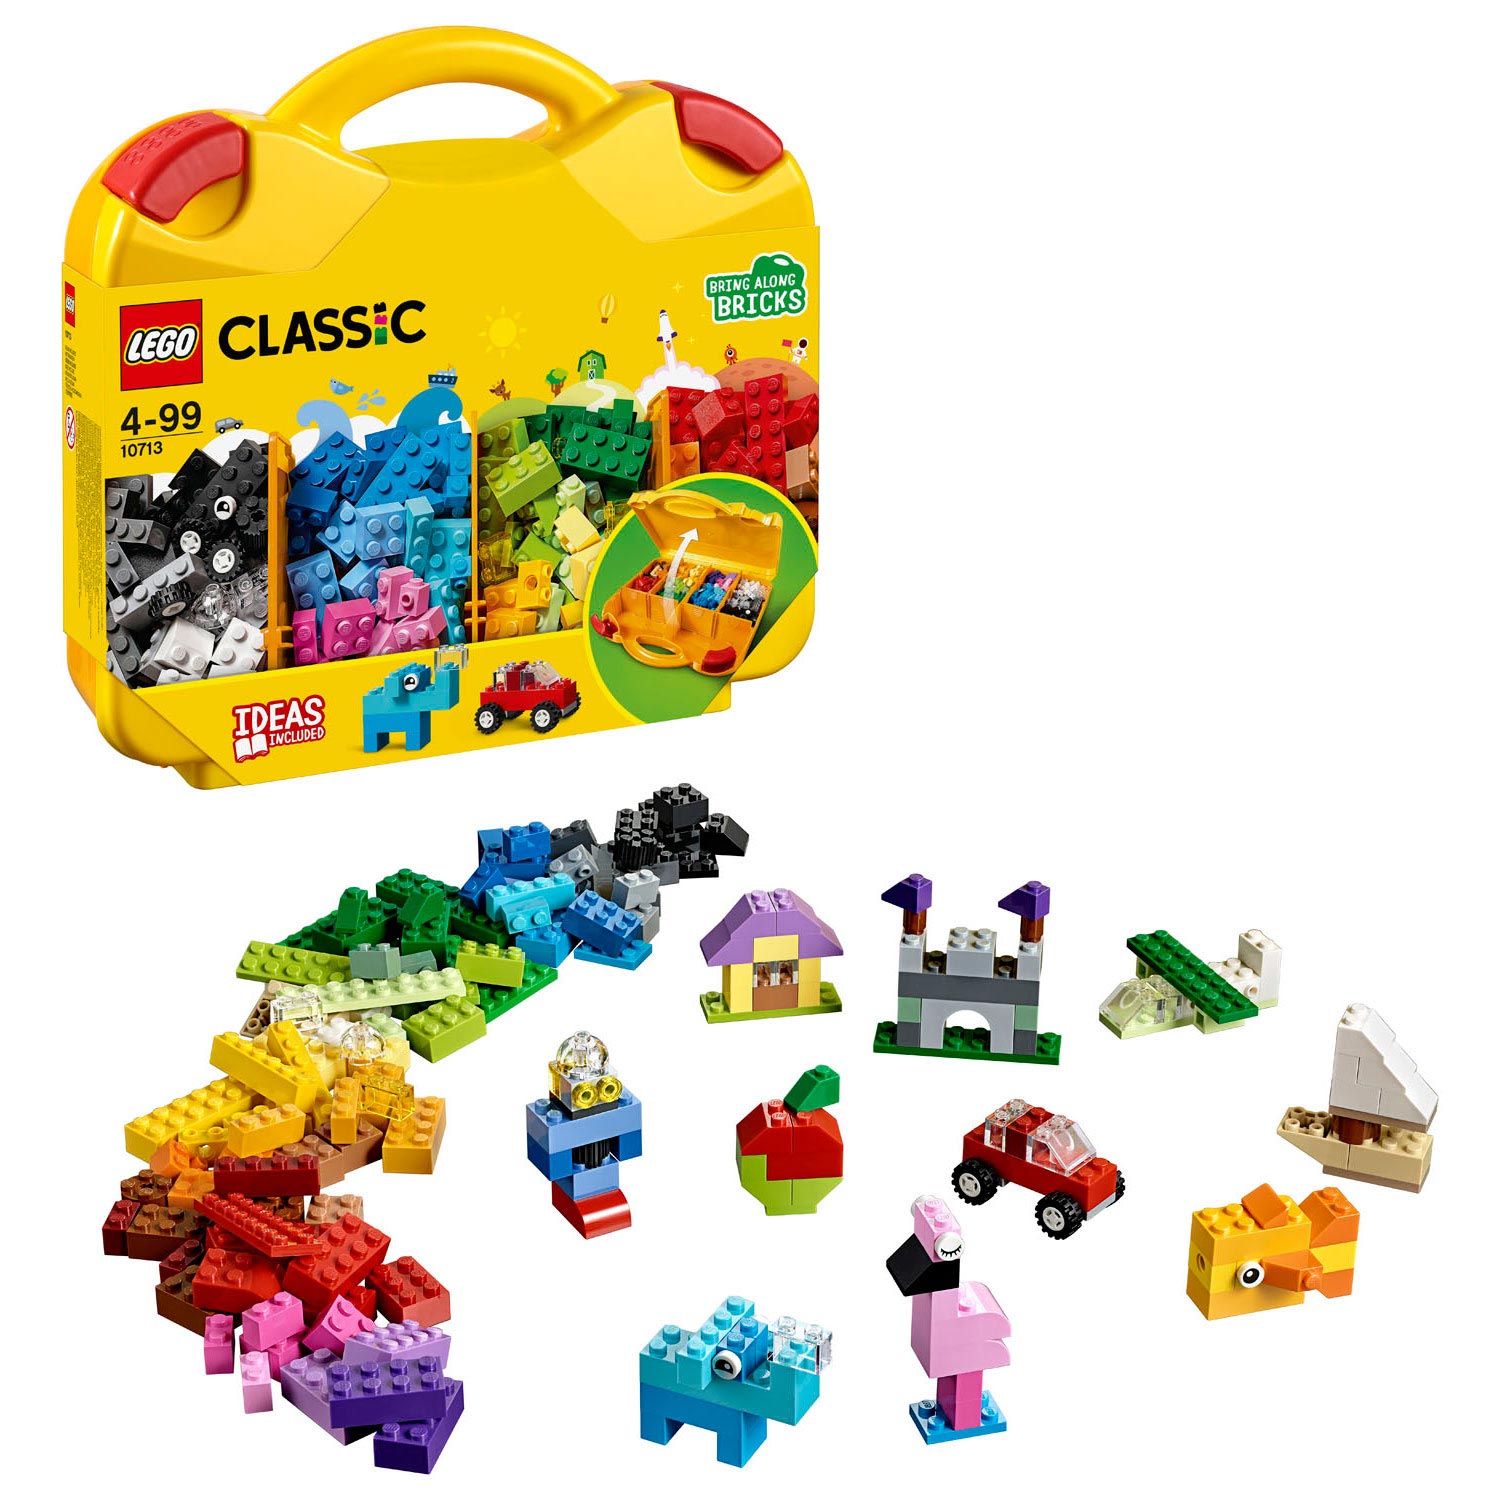 LEGO Classic 10713 La valise créative